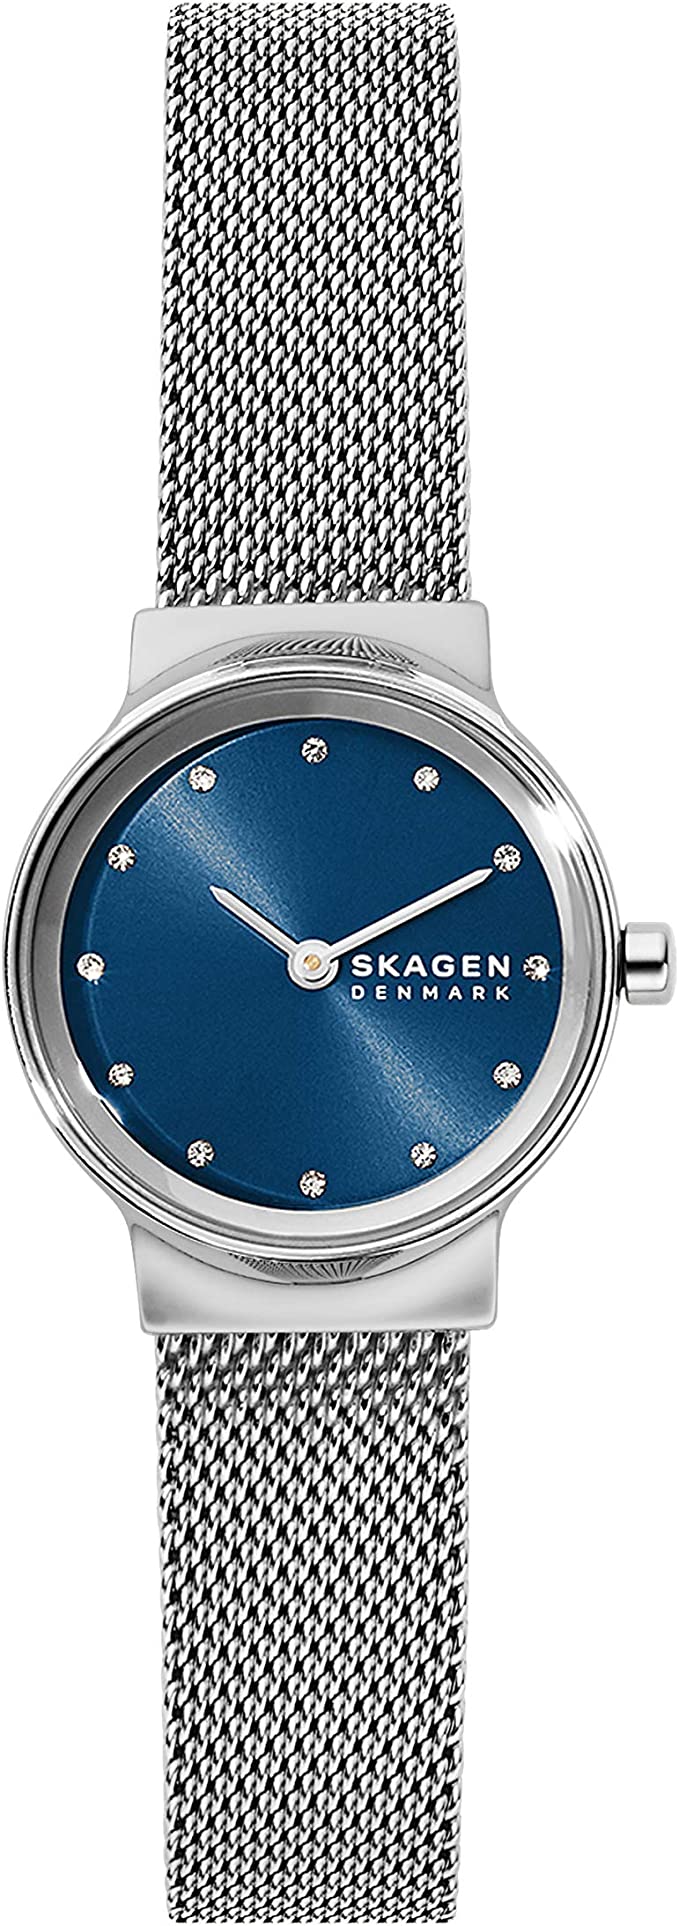 Skagen Women's Freja Quartz Watch w/ Stainless Steel Strap $35 & More + Free Shipping